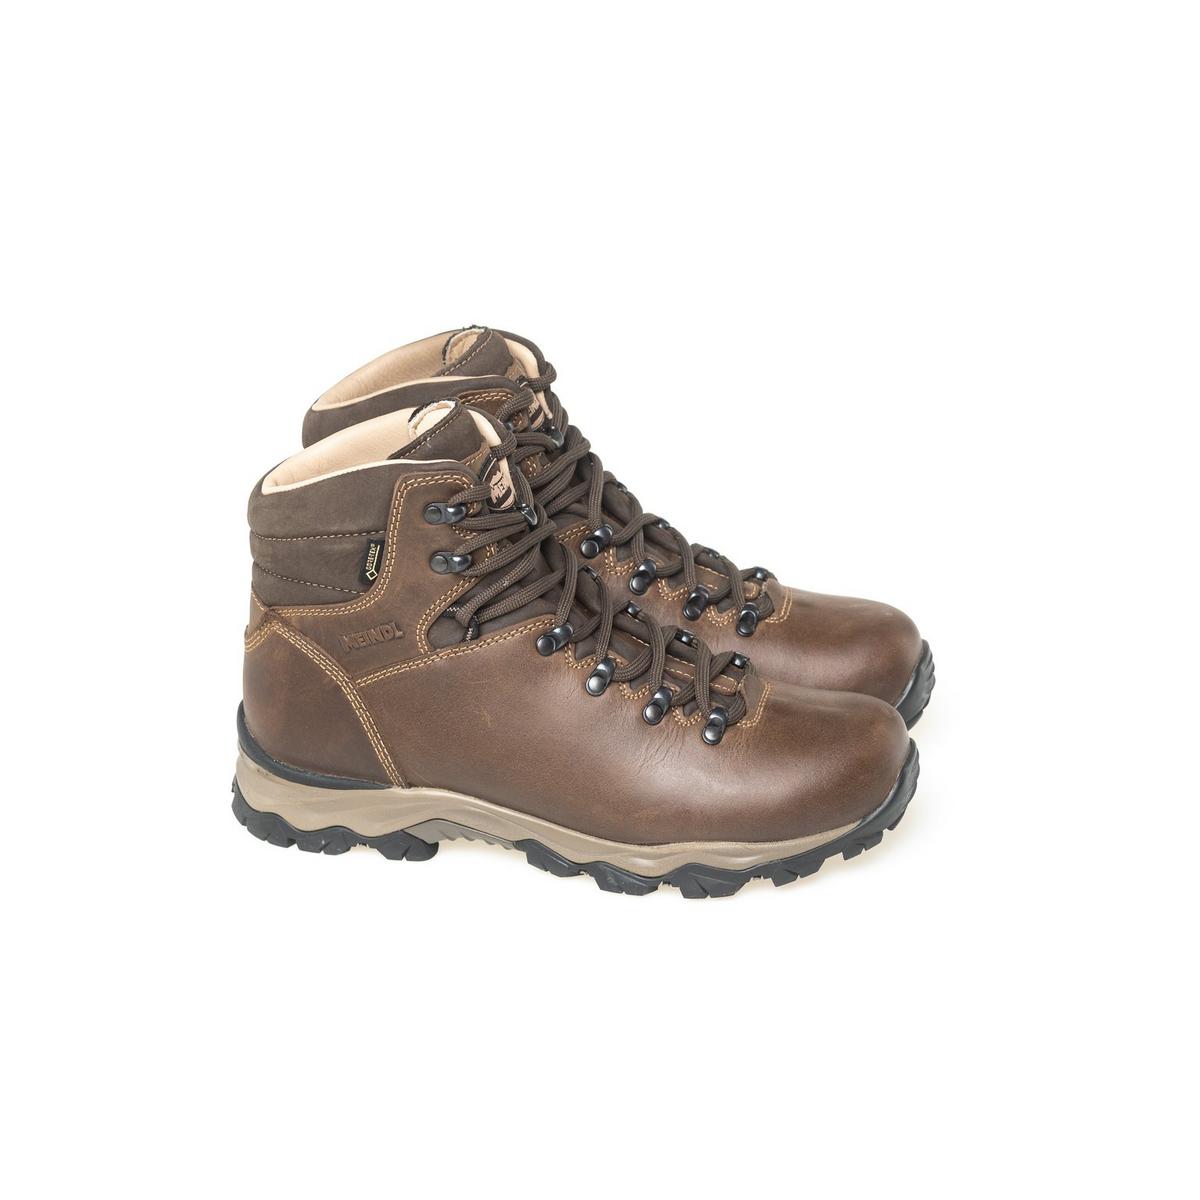 Meindl Men's Peru GORE-TEX Walking Boots - Brown